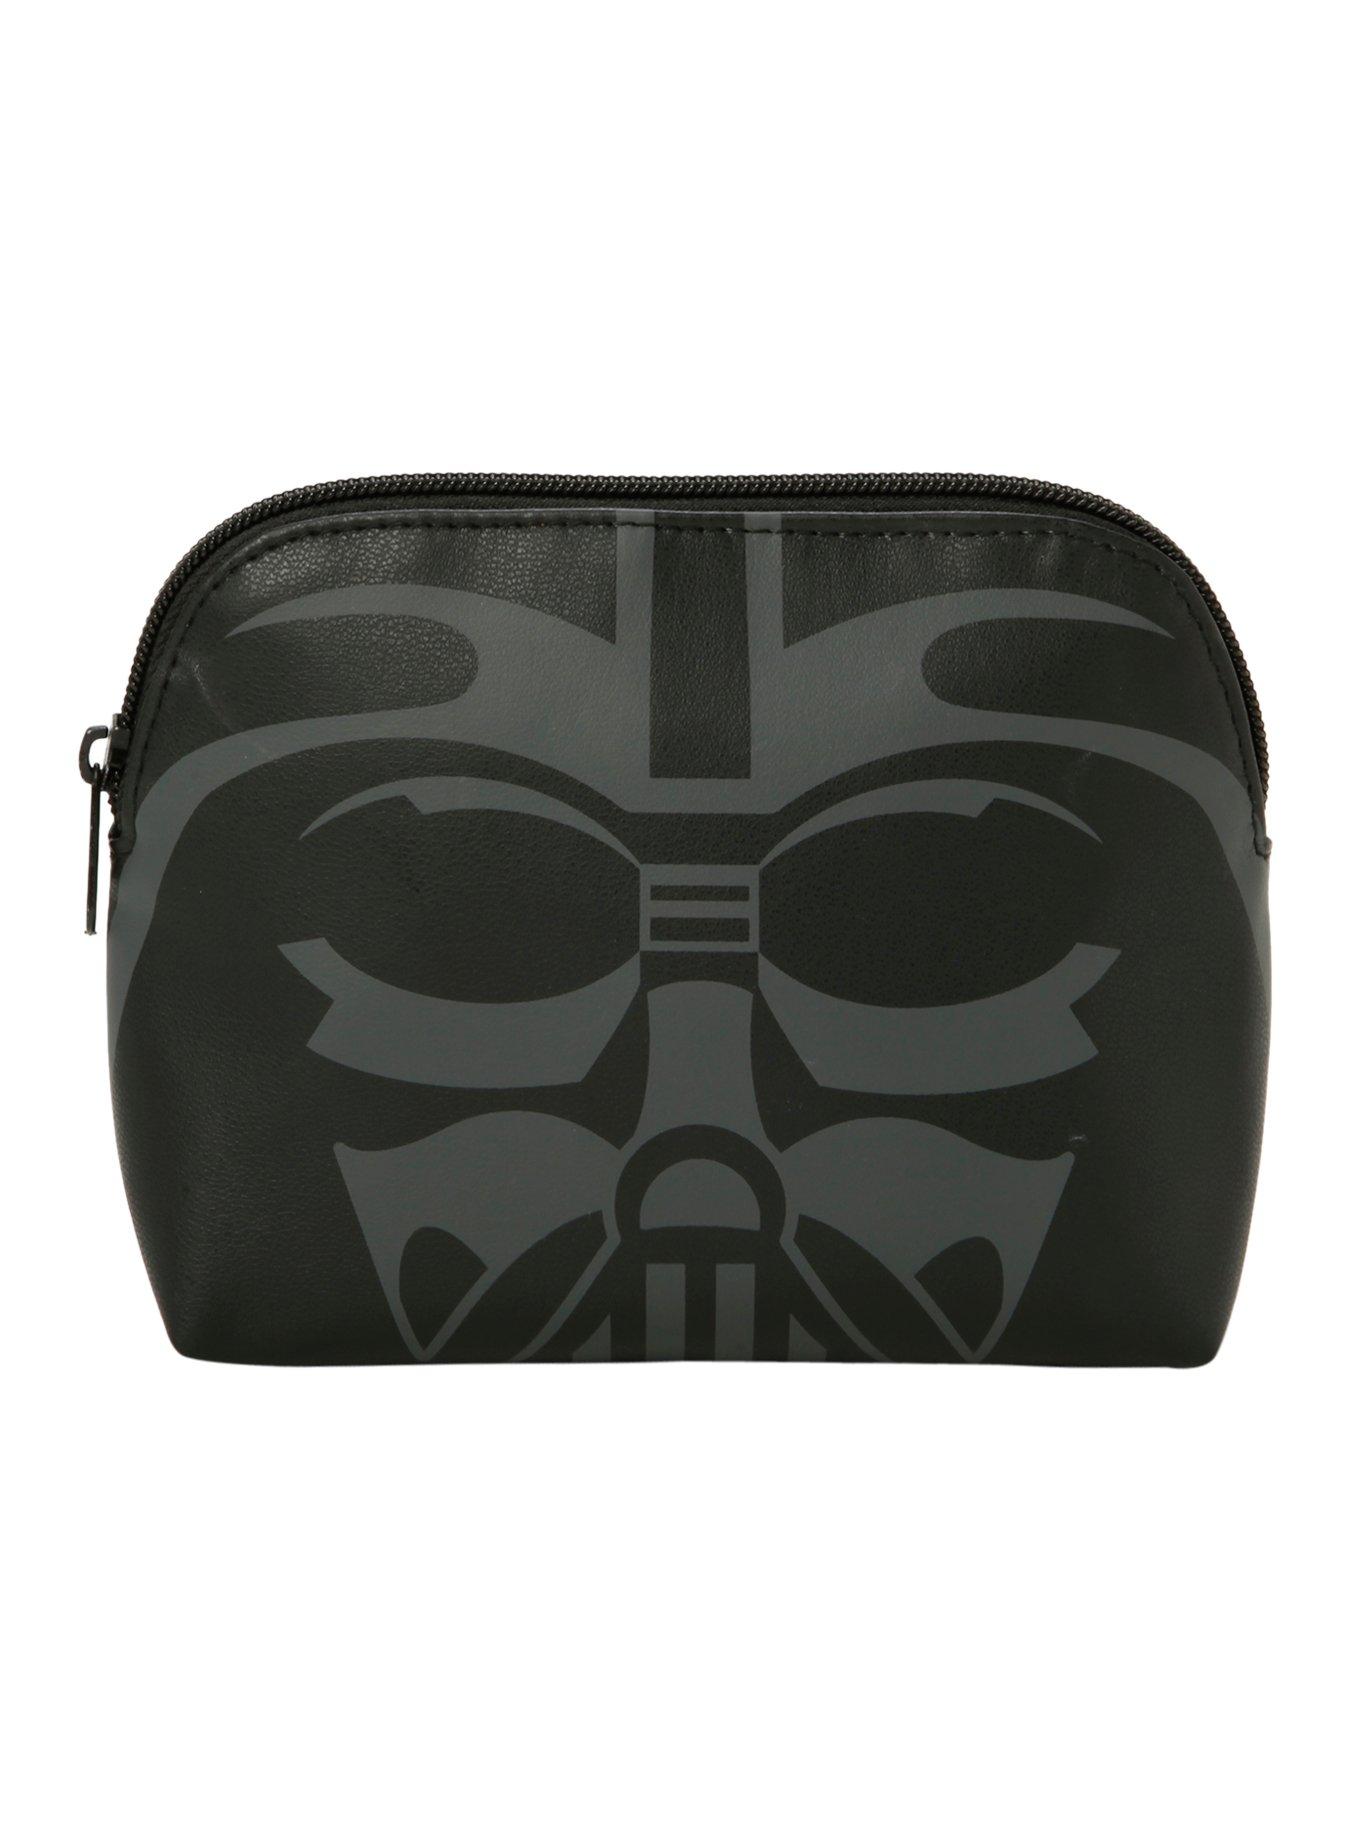 Star Wars Darth Vader Cosmetic Bag, , hi-res